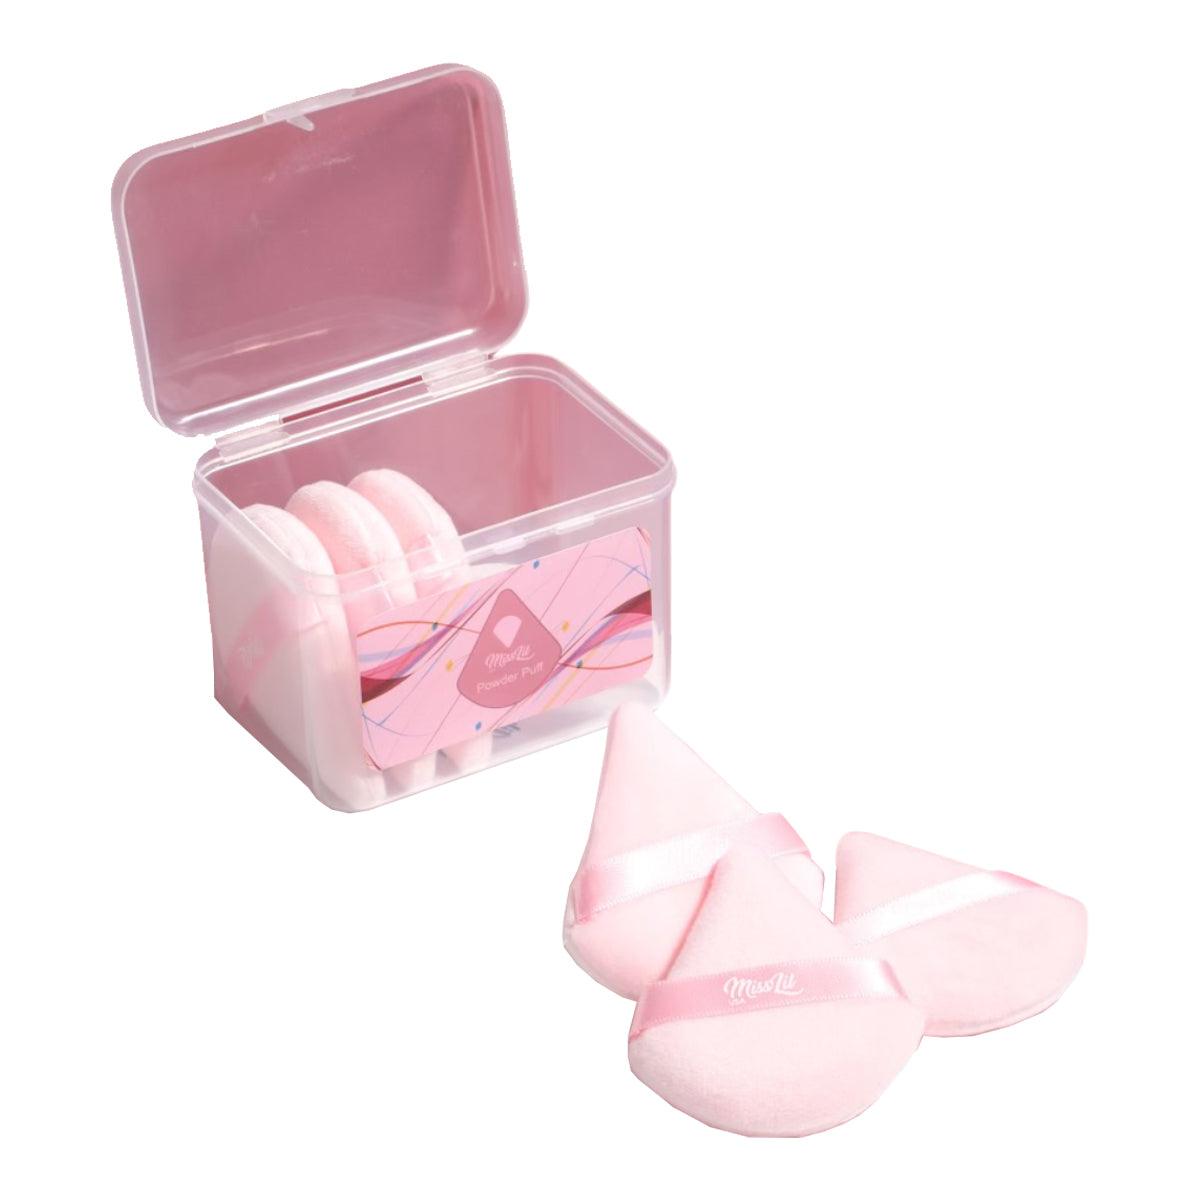 Powder puff light pink in a box - Miss Lil USA Wholesale